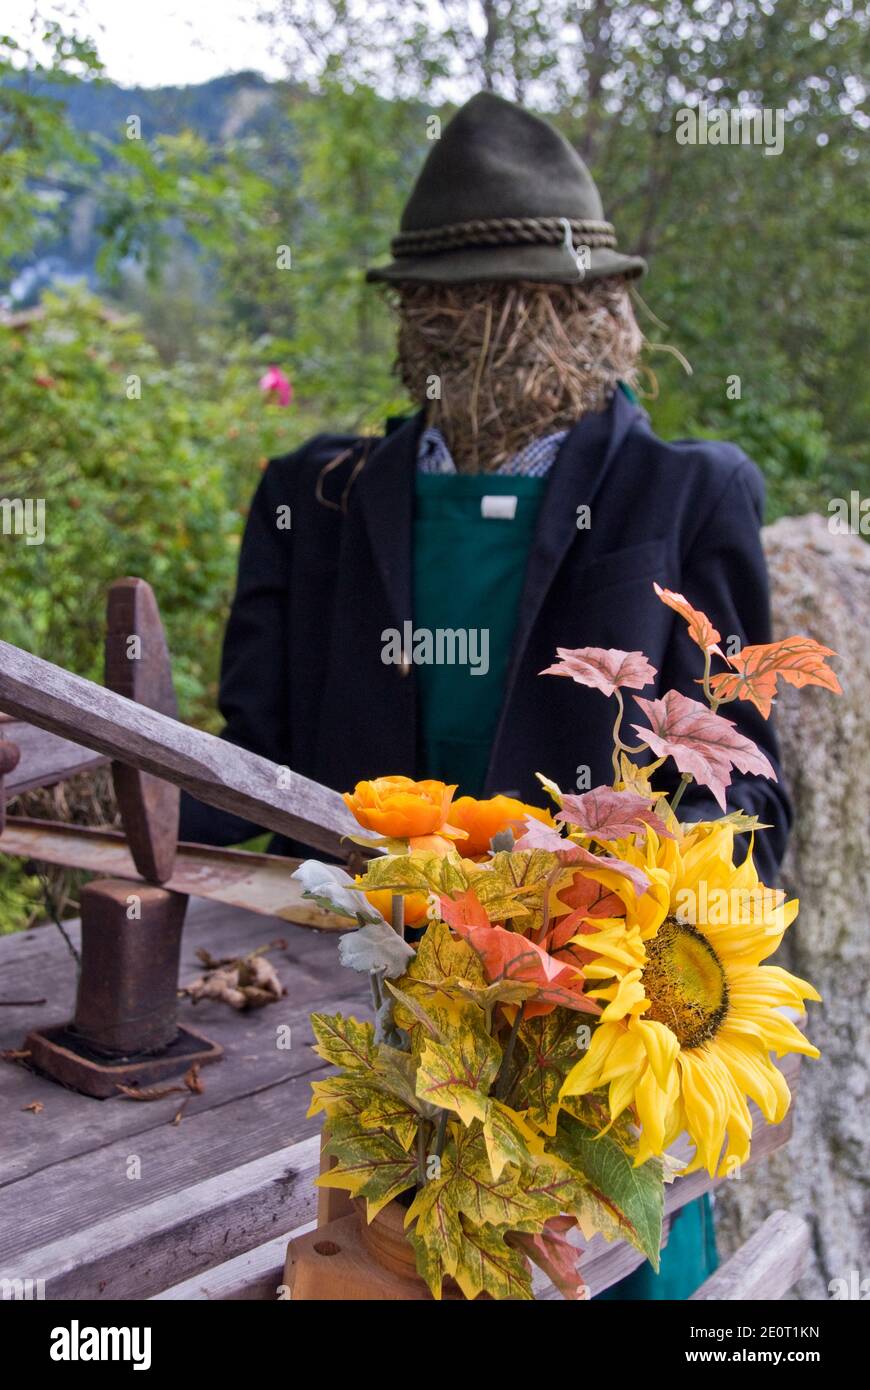 Scarecrow men, hay-stuffed figures, decorate the village of Krimml, near Krimml Waterfalls (Krimmler Wasserfalle), the highest waterfall in Austria. Stock Photo